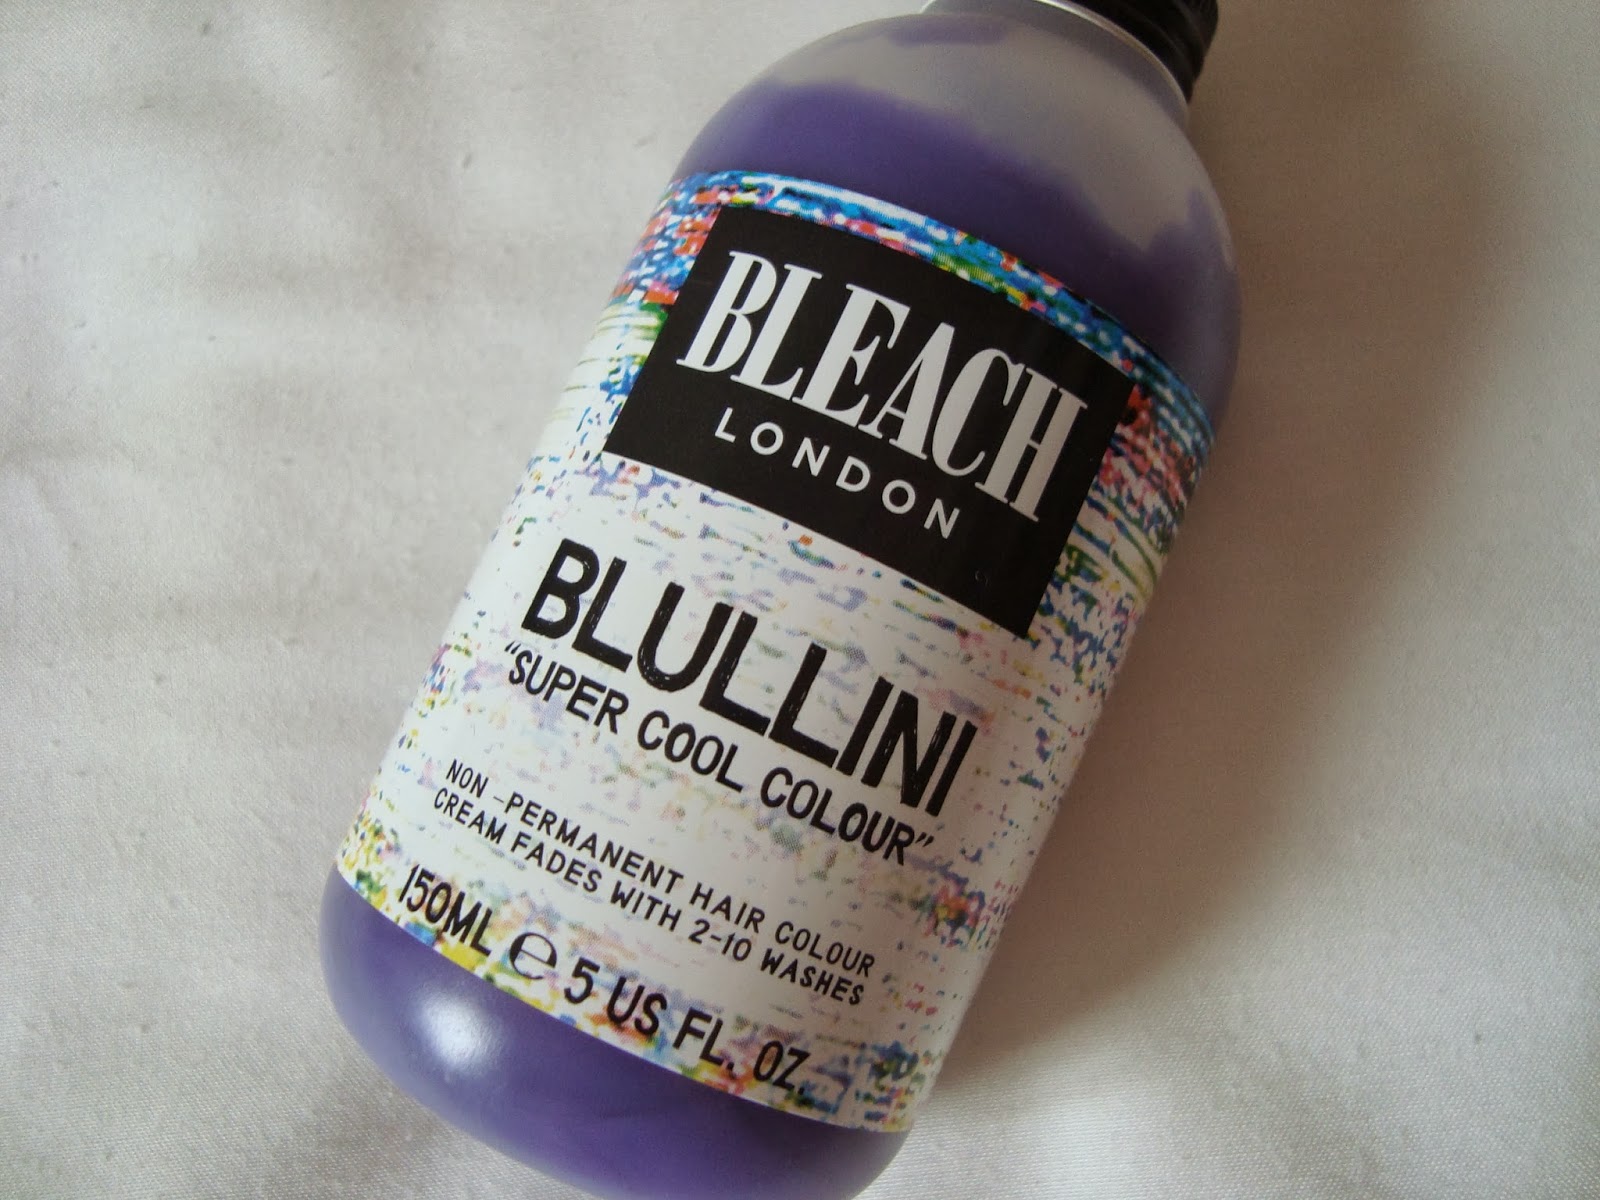 8. Bleach London Super Cool Colour - Blullini - wide 7